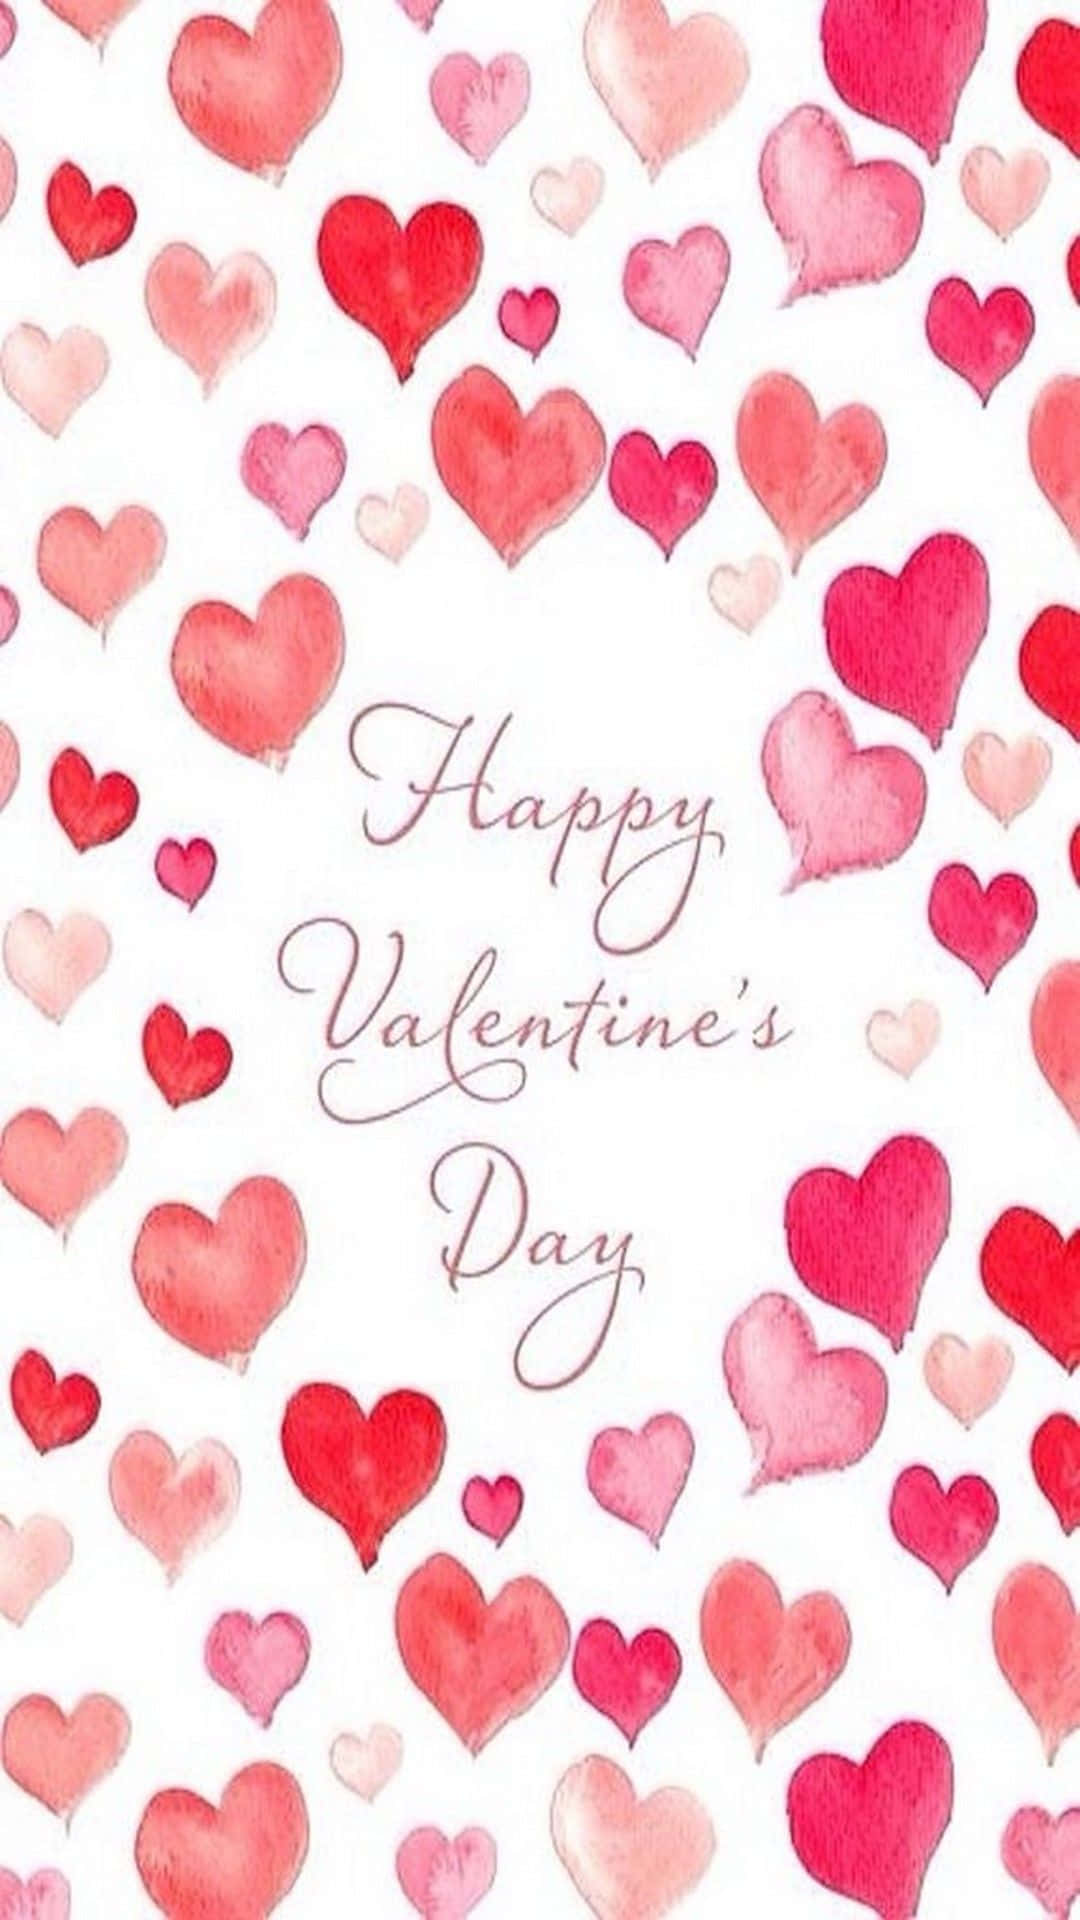 Happy Valentine's Day Watercolor Hearts Wallpaper